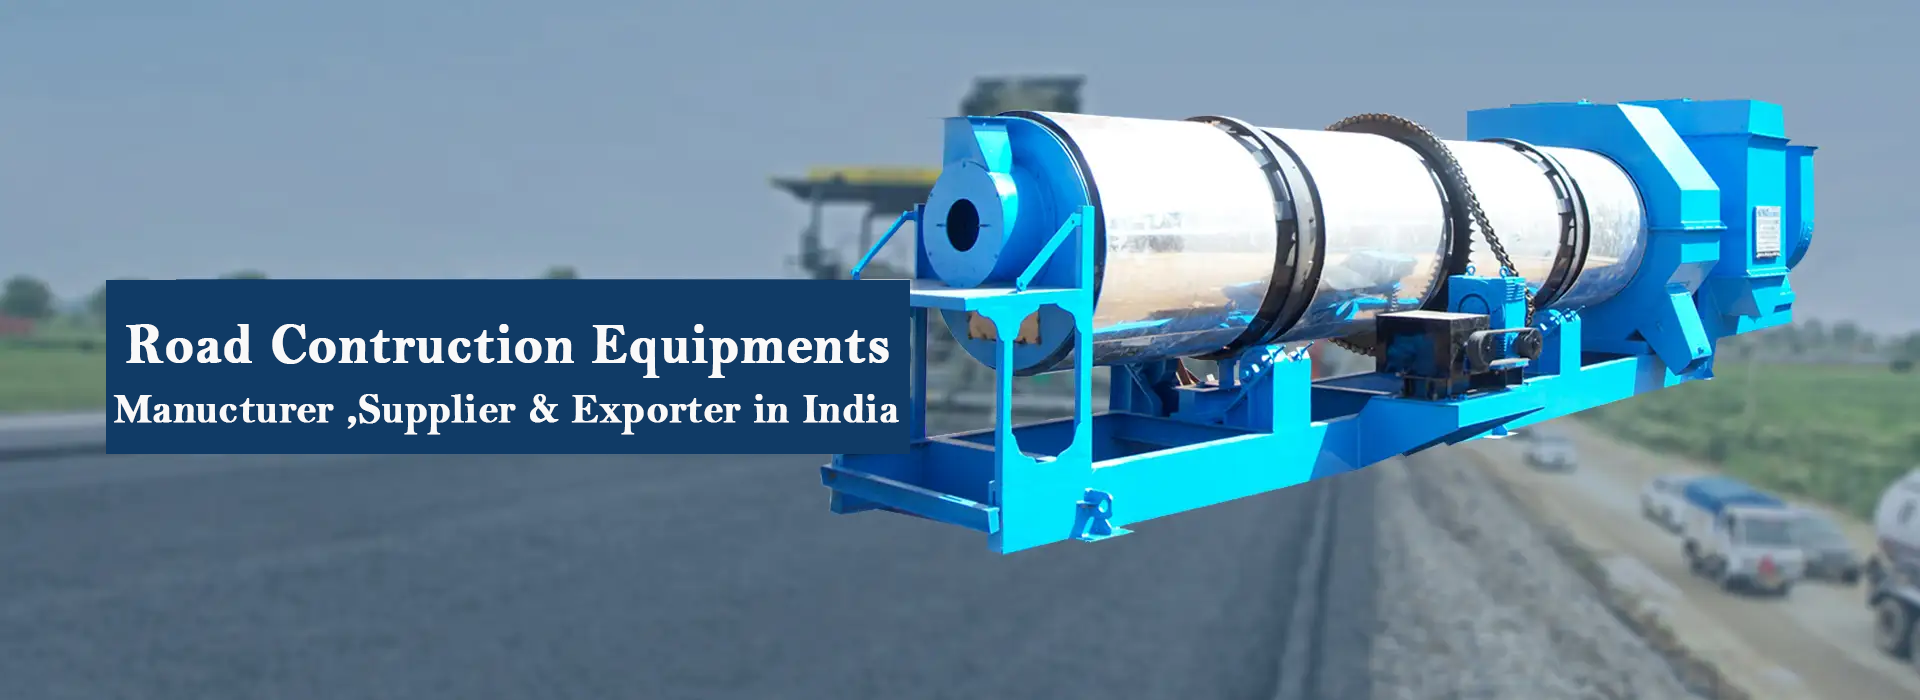 Road Construction Equipment In India